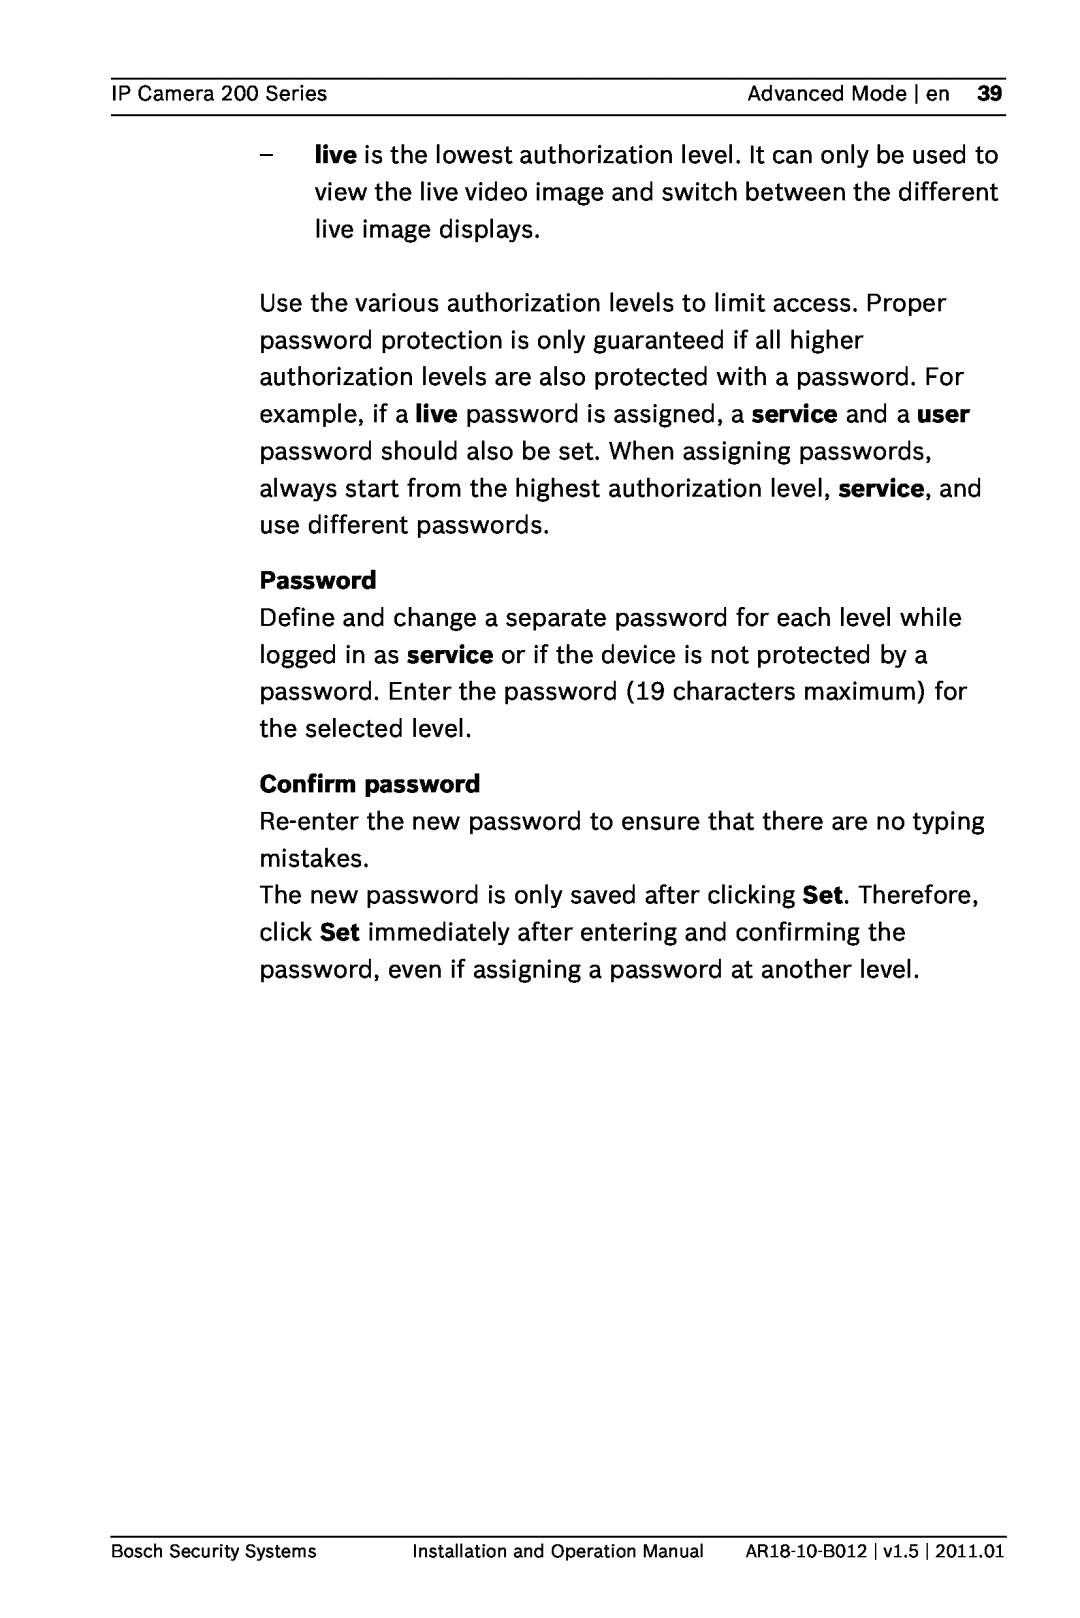 Bosch Appliances NDC-265-P operation manual Password, Confirm password 